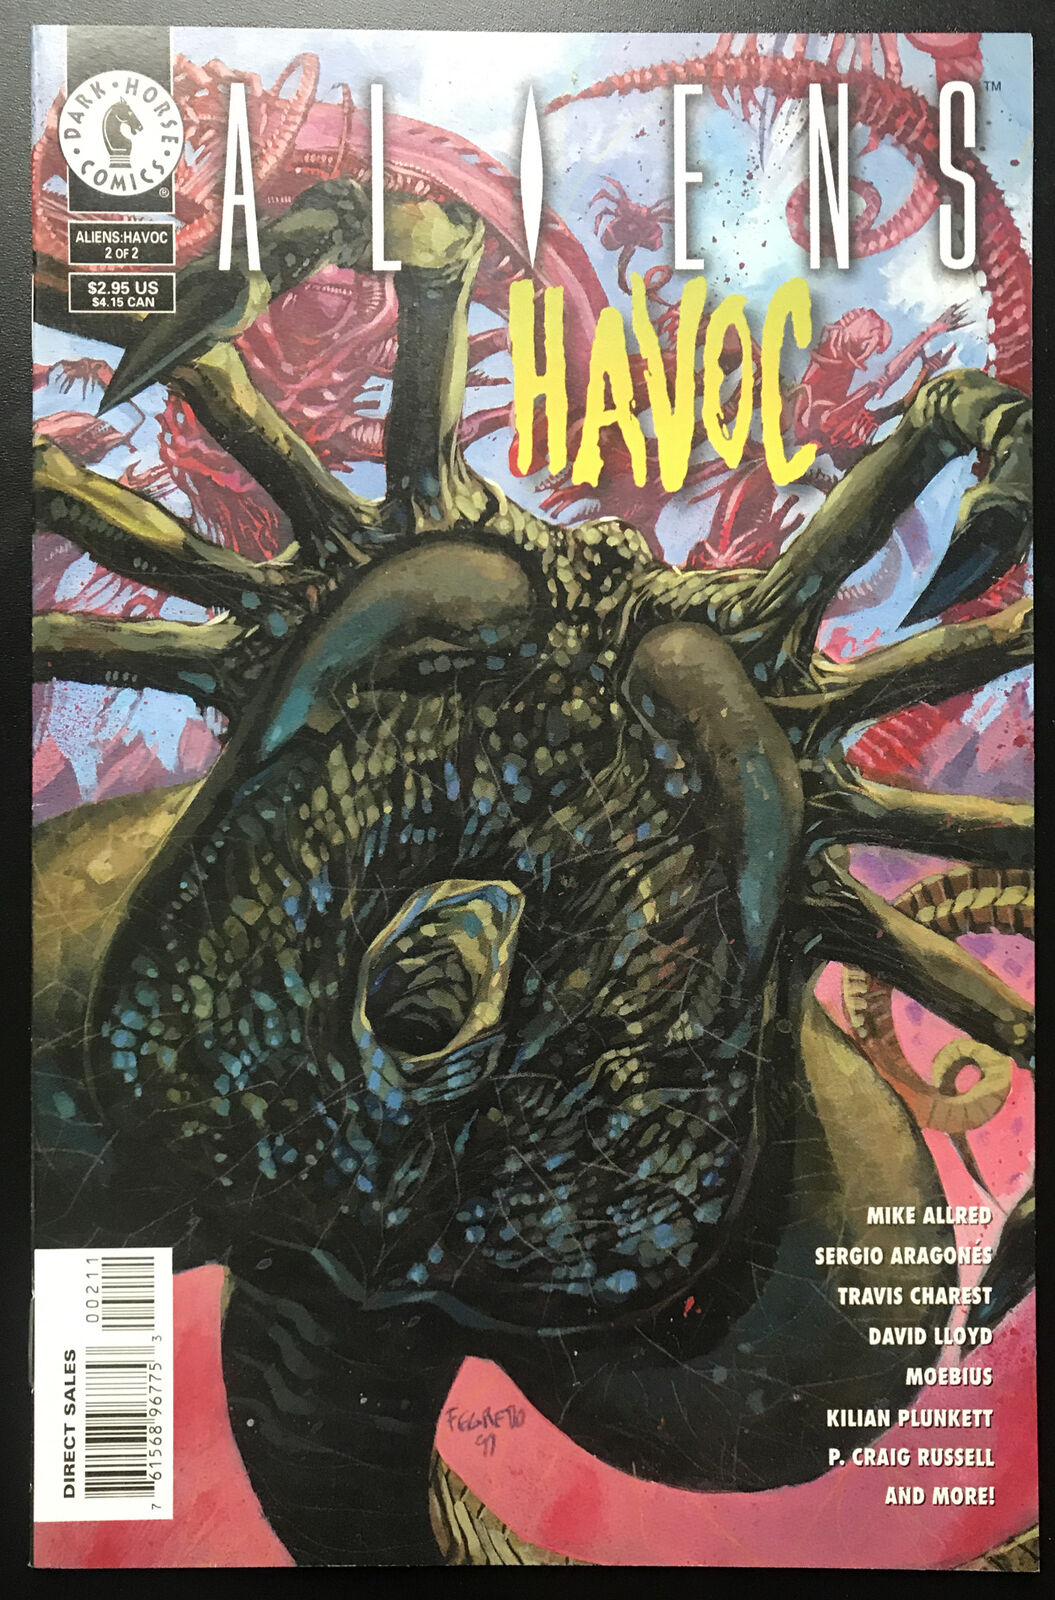 ALIENS: Havoc Complete Mini-Series 2-Book Lot Dark Horse 1994 Rare HIGH GRADE - aliencomics.ca